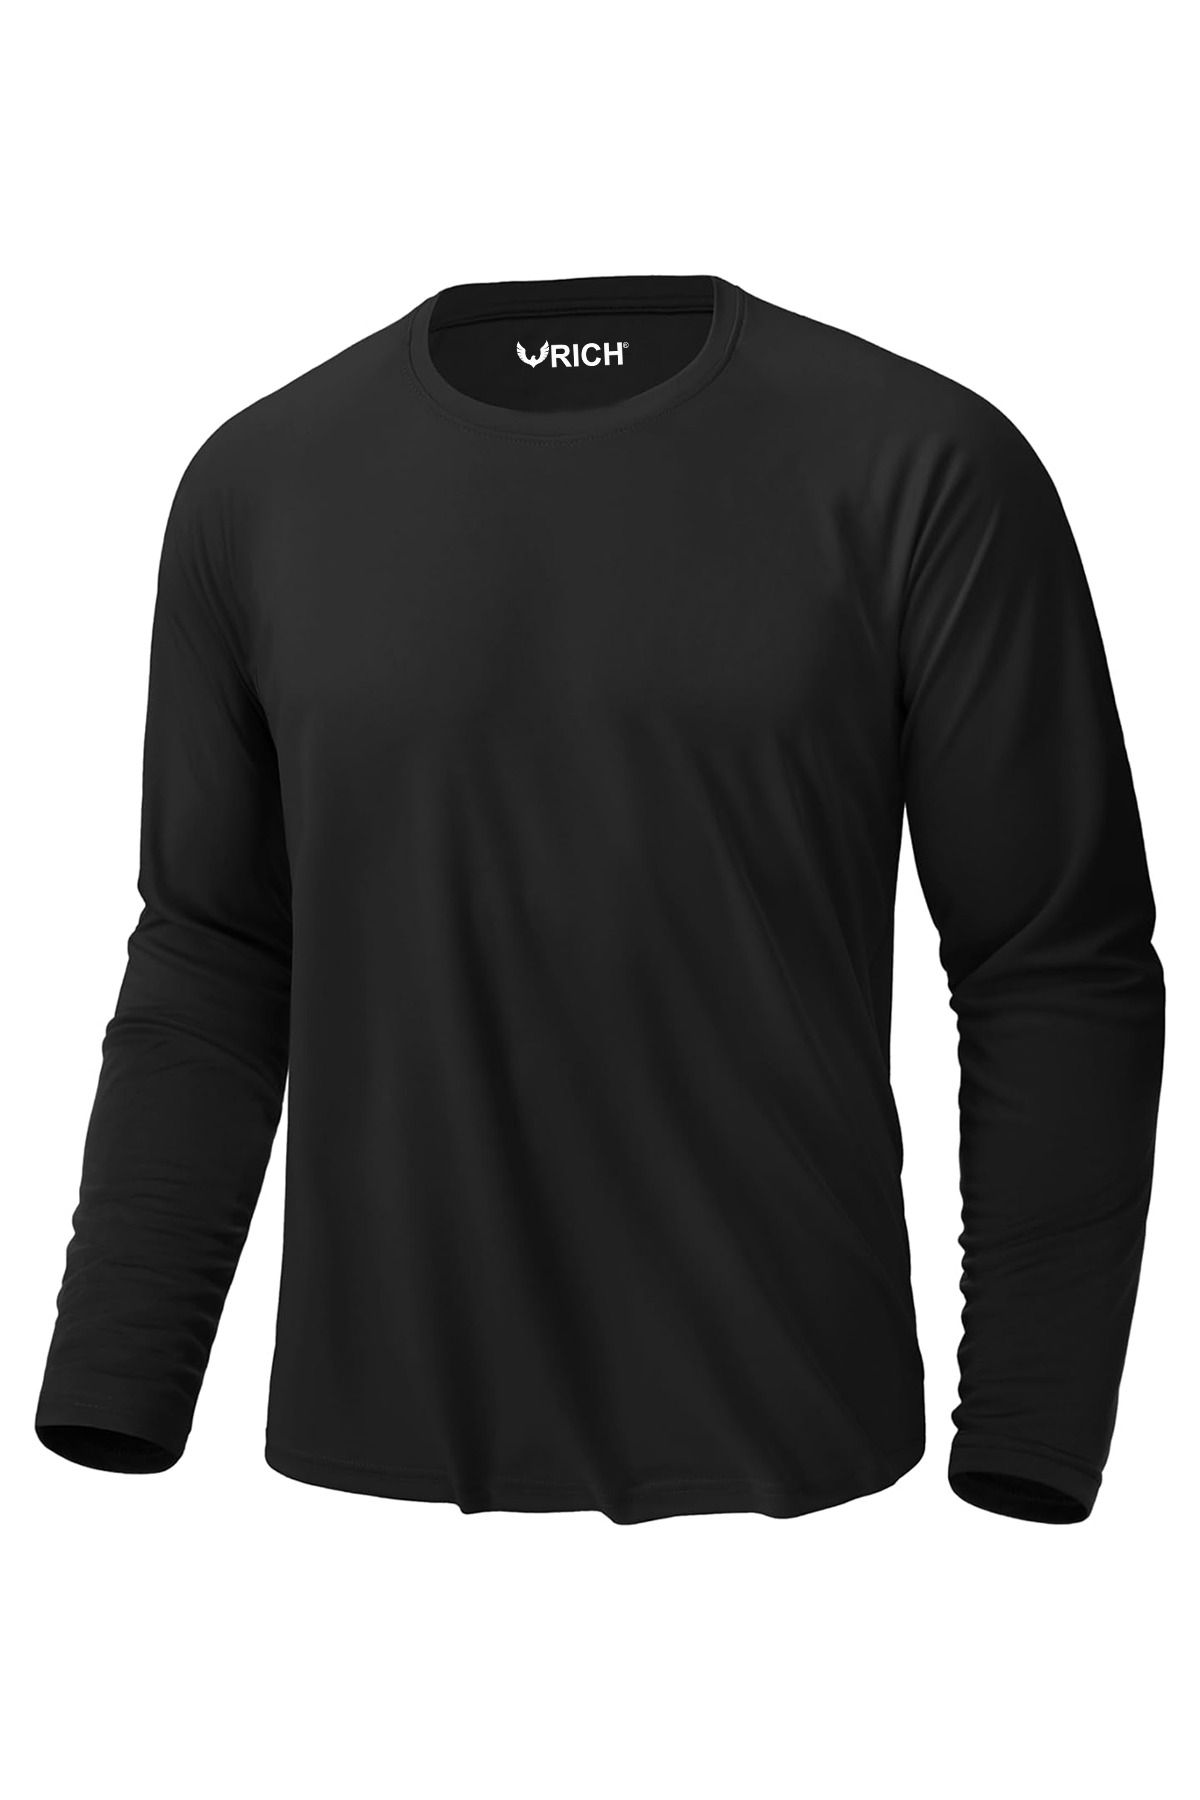 Rich Erkek Siyah Basic Uzun Kollu Tişört Sporcu Body T-shirt